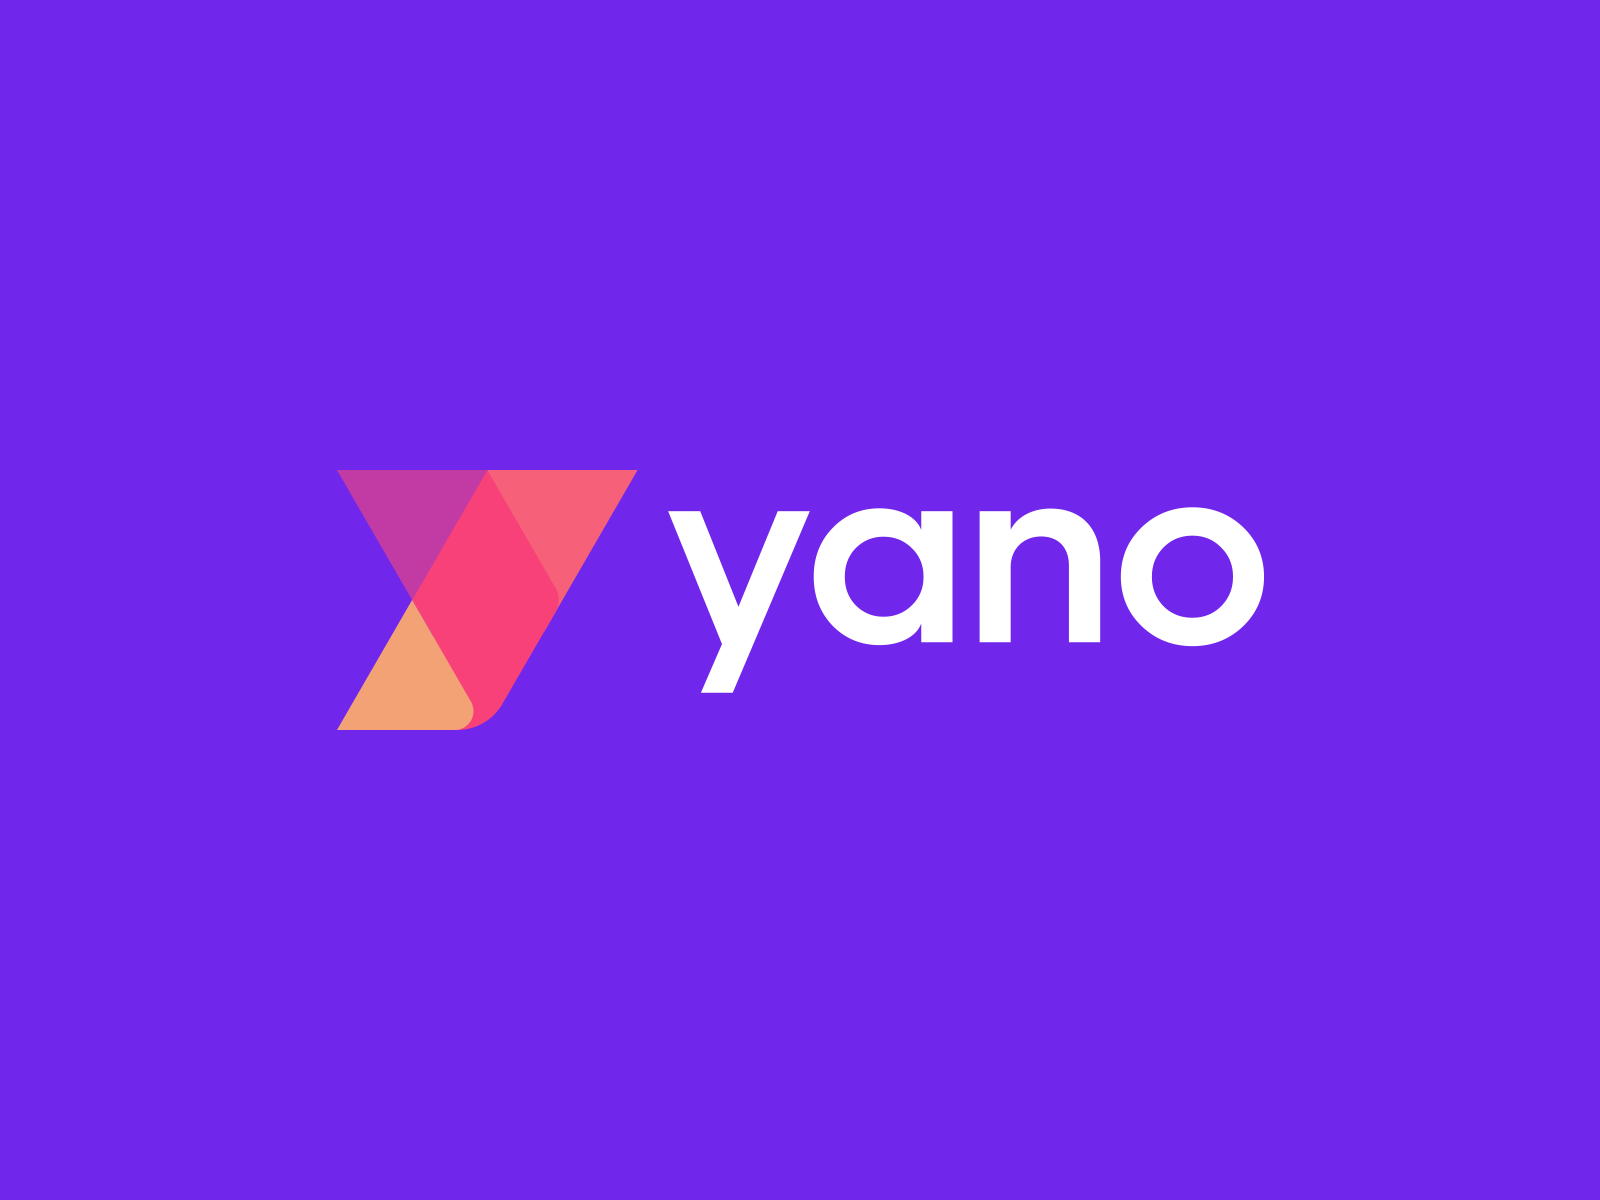 Yano Logo Design